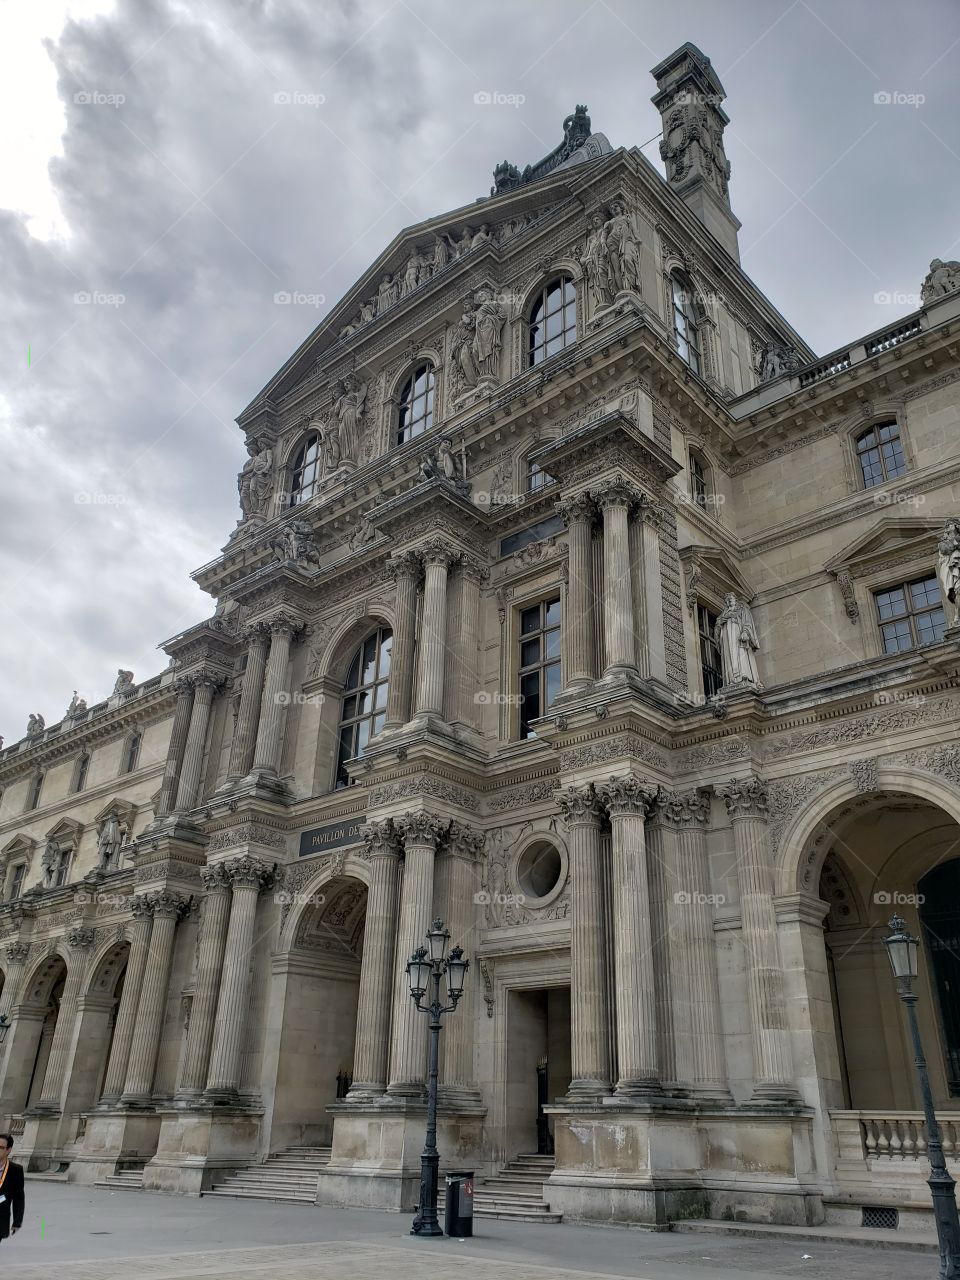 arquitectura parisina rodeando el museo de Louvre